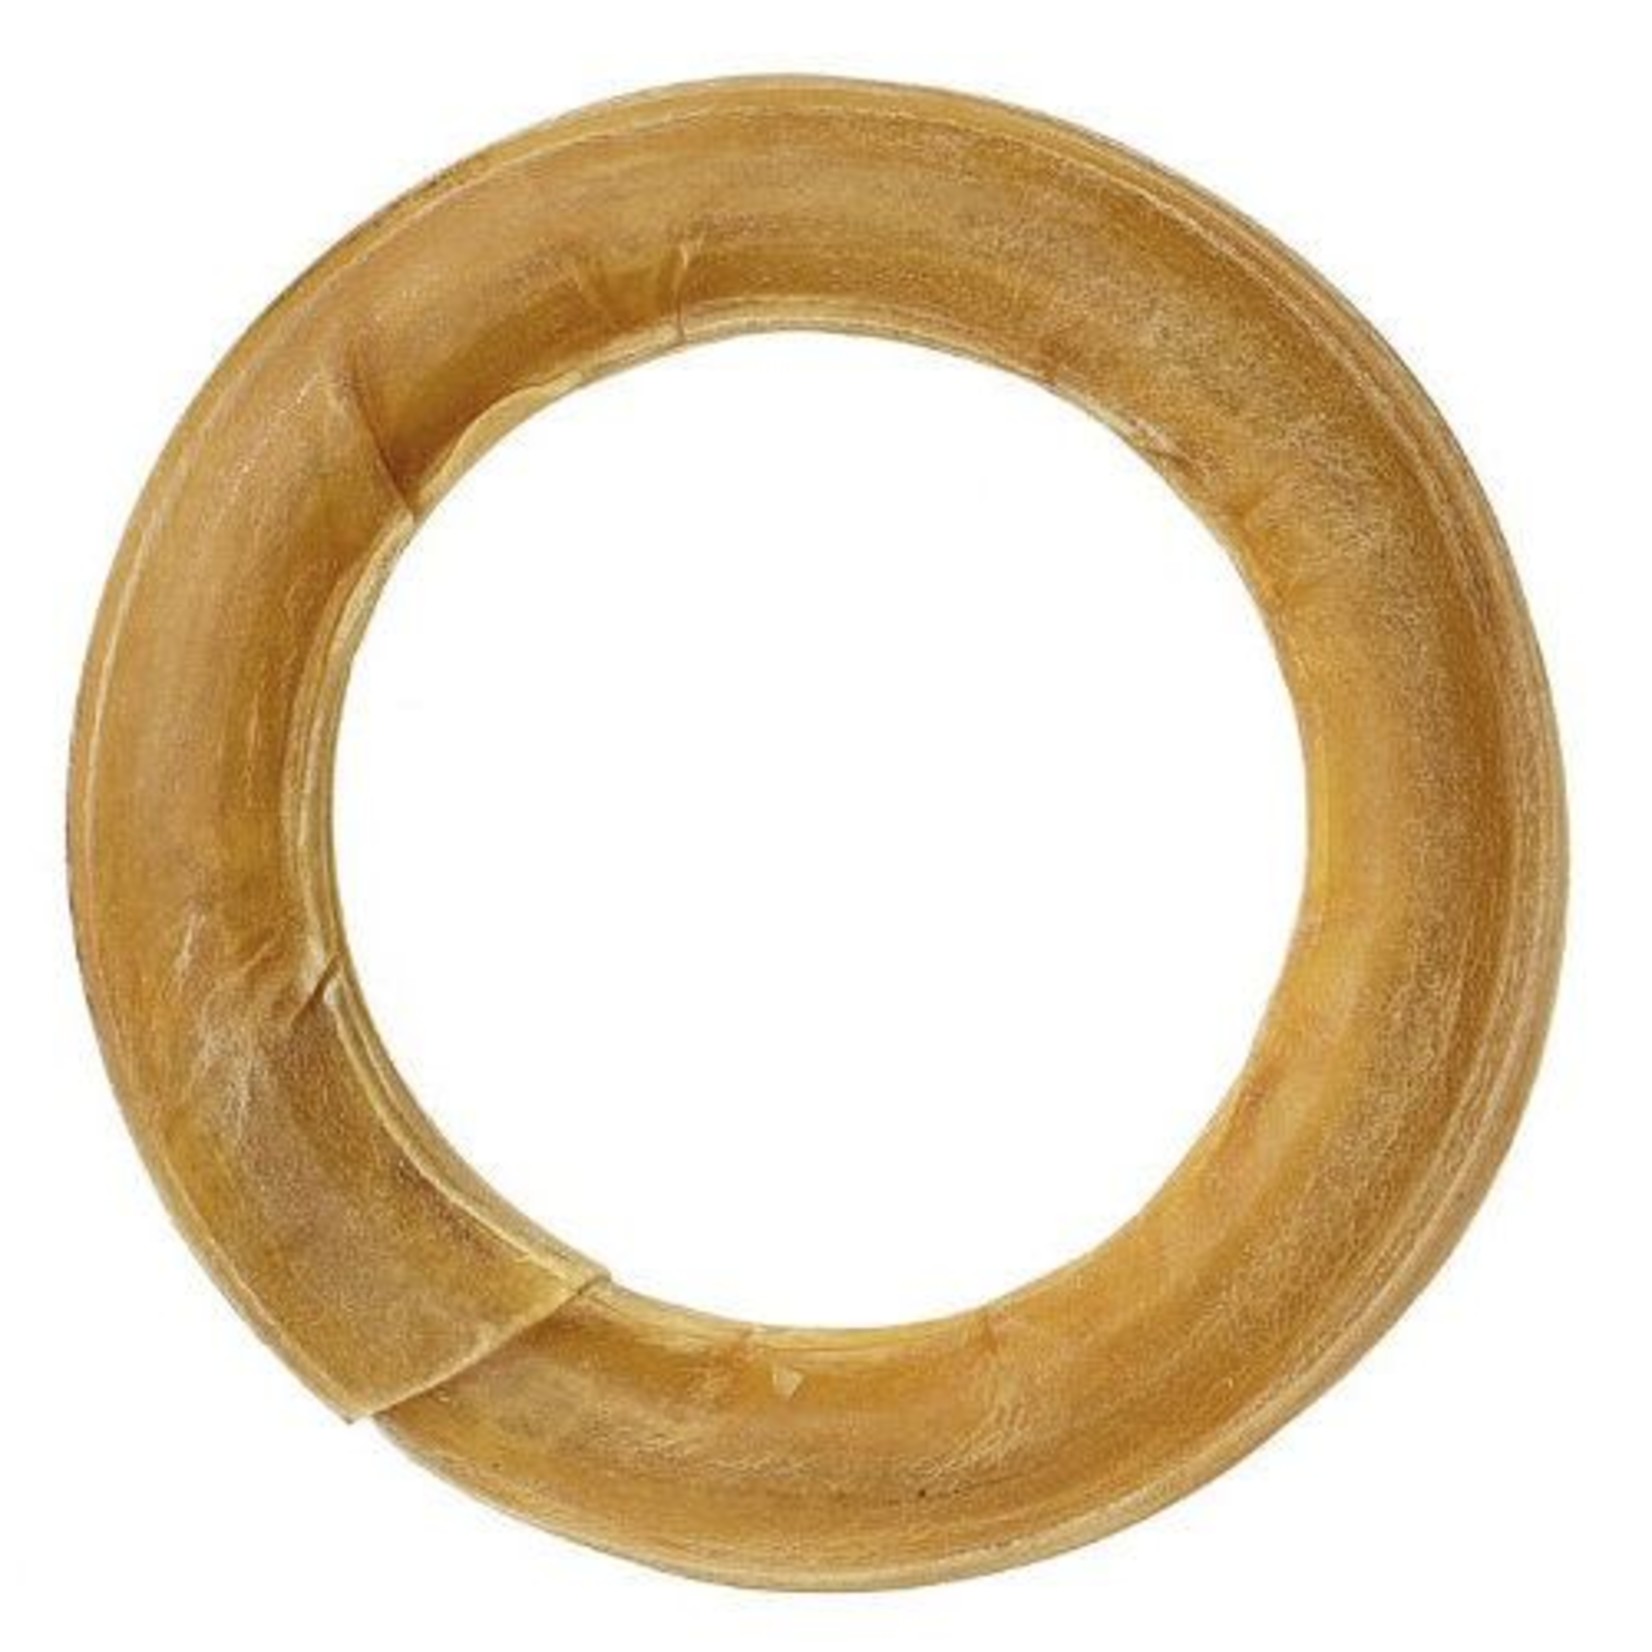 PPI Rawhide Pressed Ring Dog Chew, 6 inch/15cm